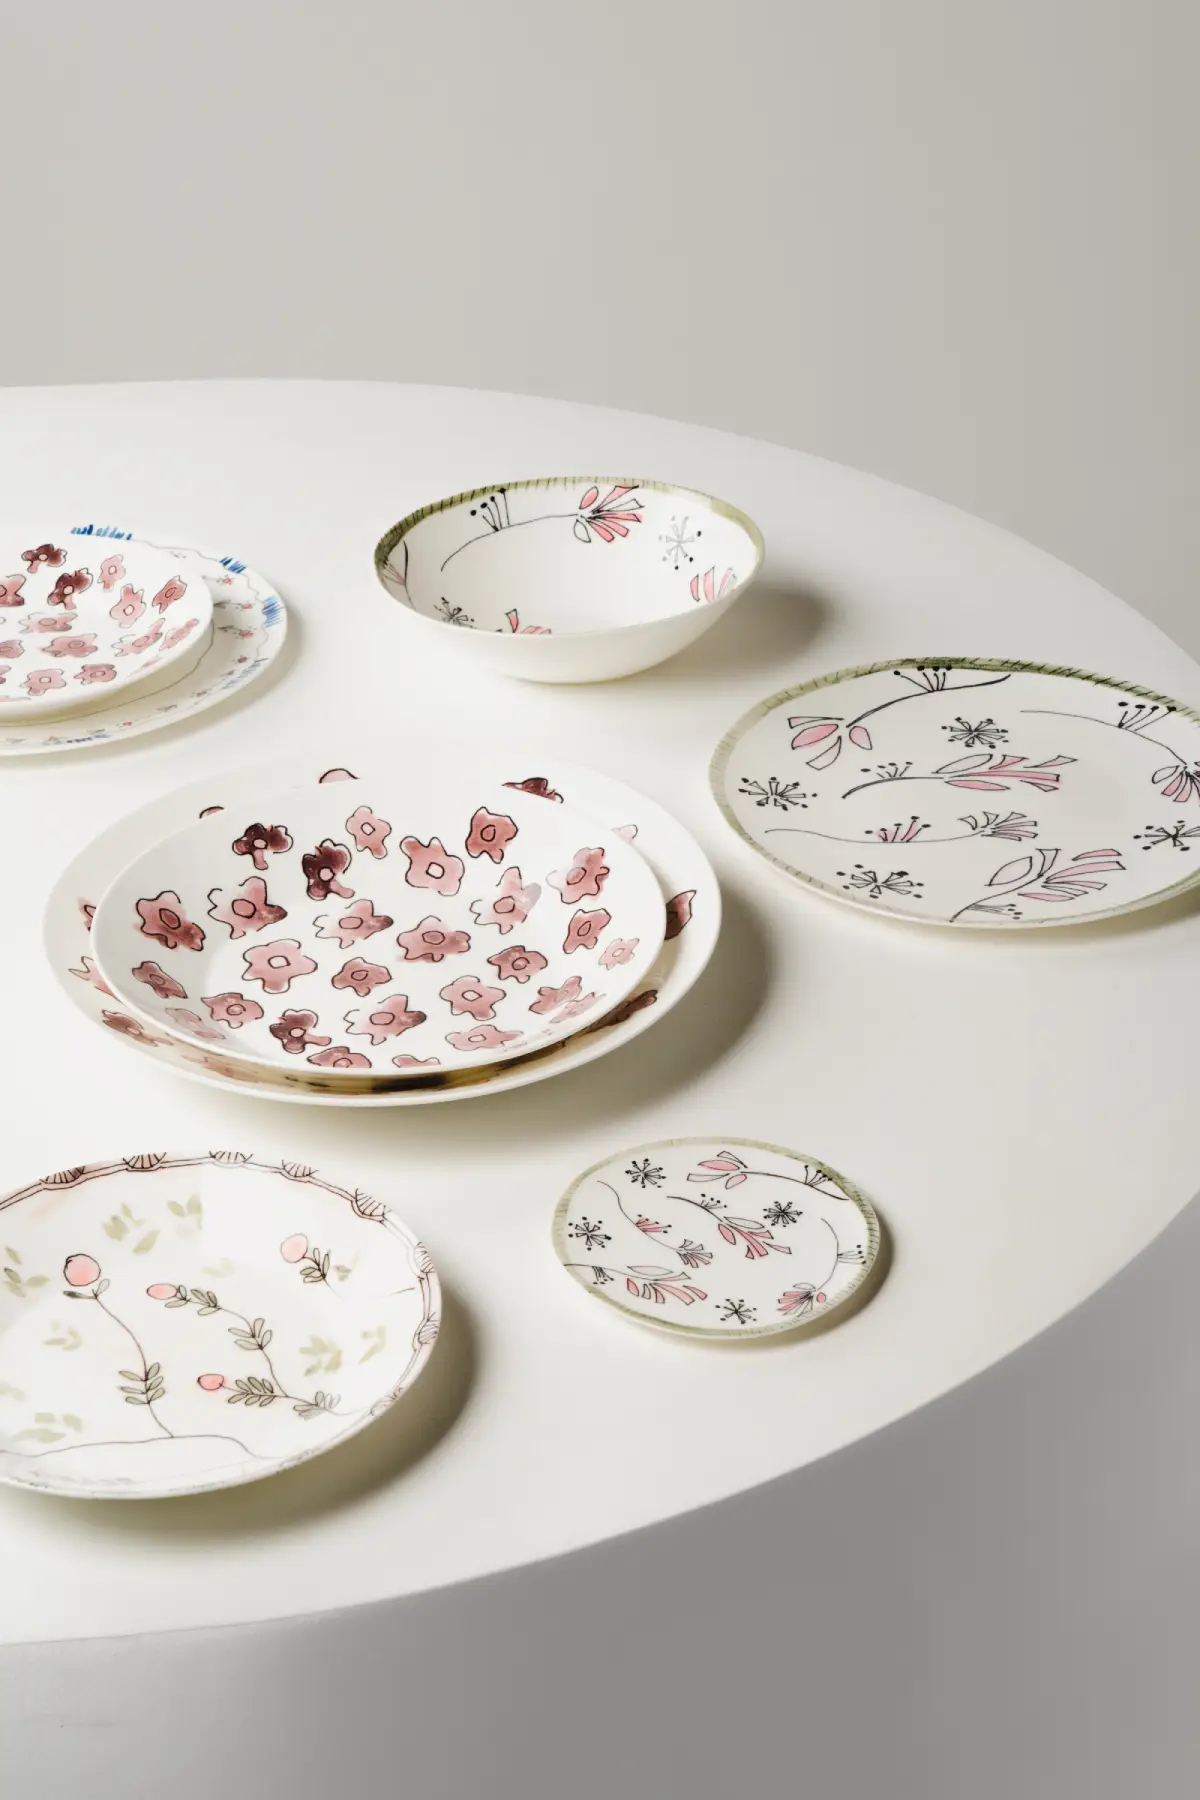 collection de vaisselle Midnight Flowers issue de la collaboration Marni x Serax